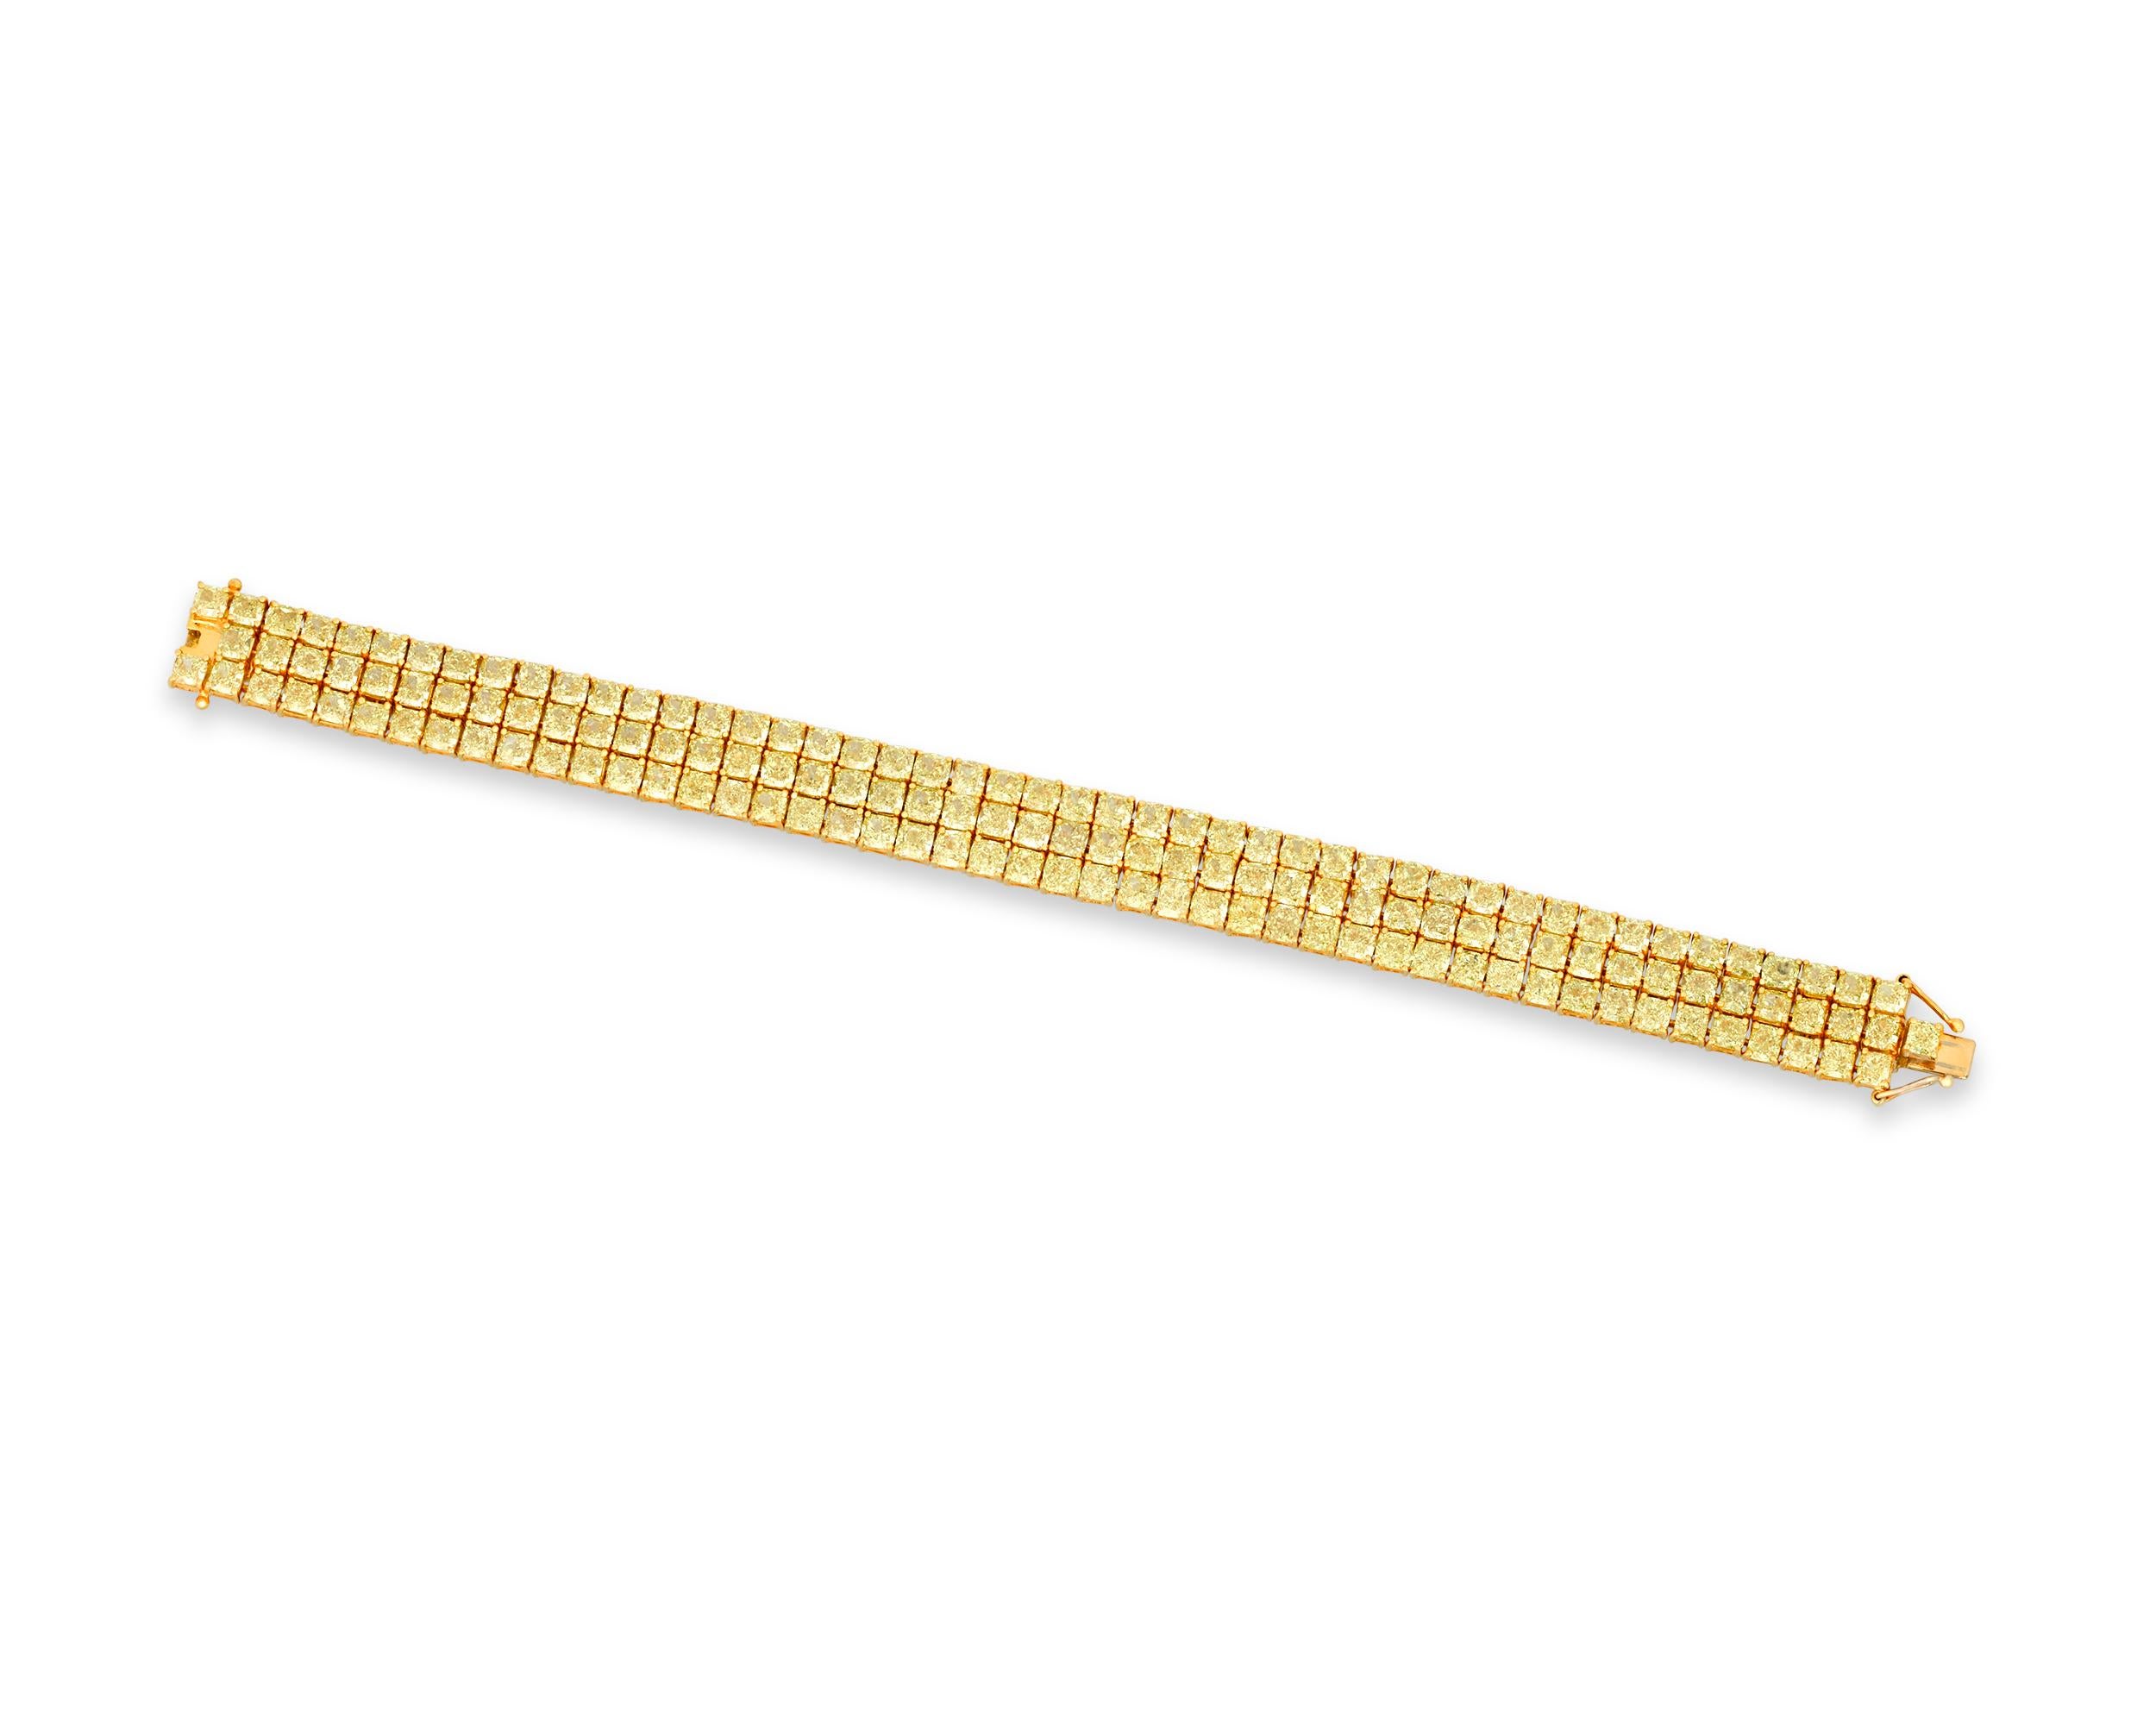 fancy yellow diamond bracelet